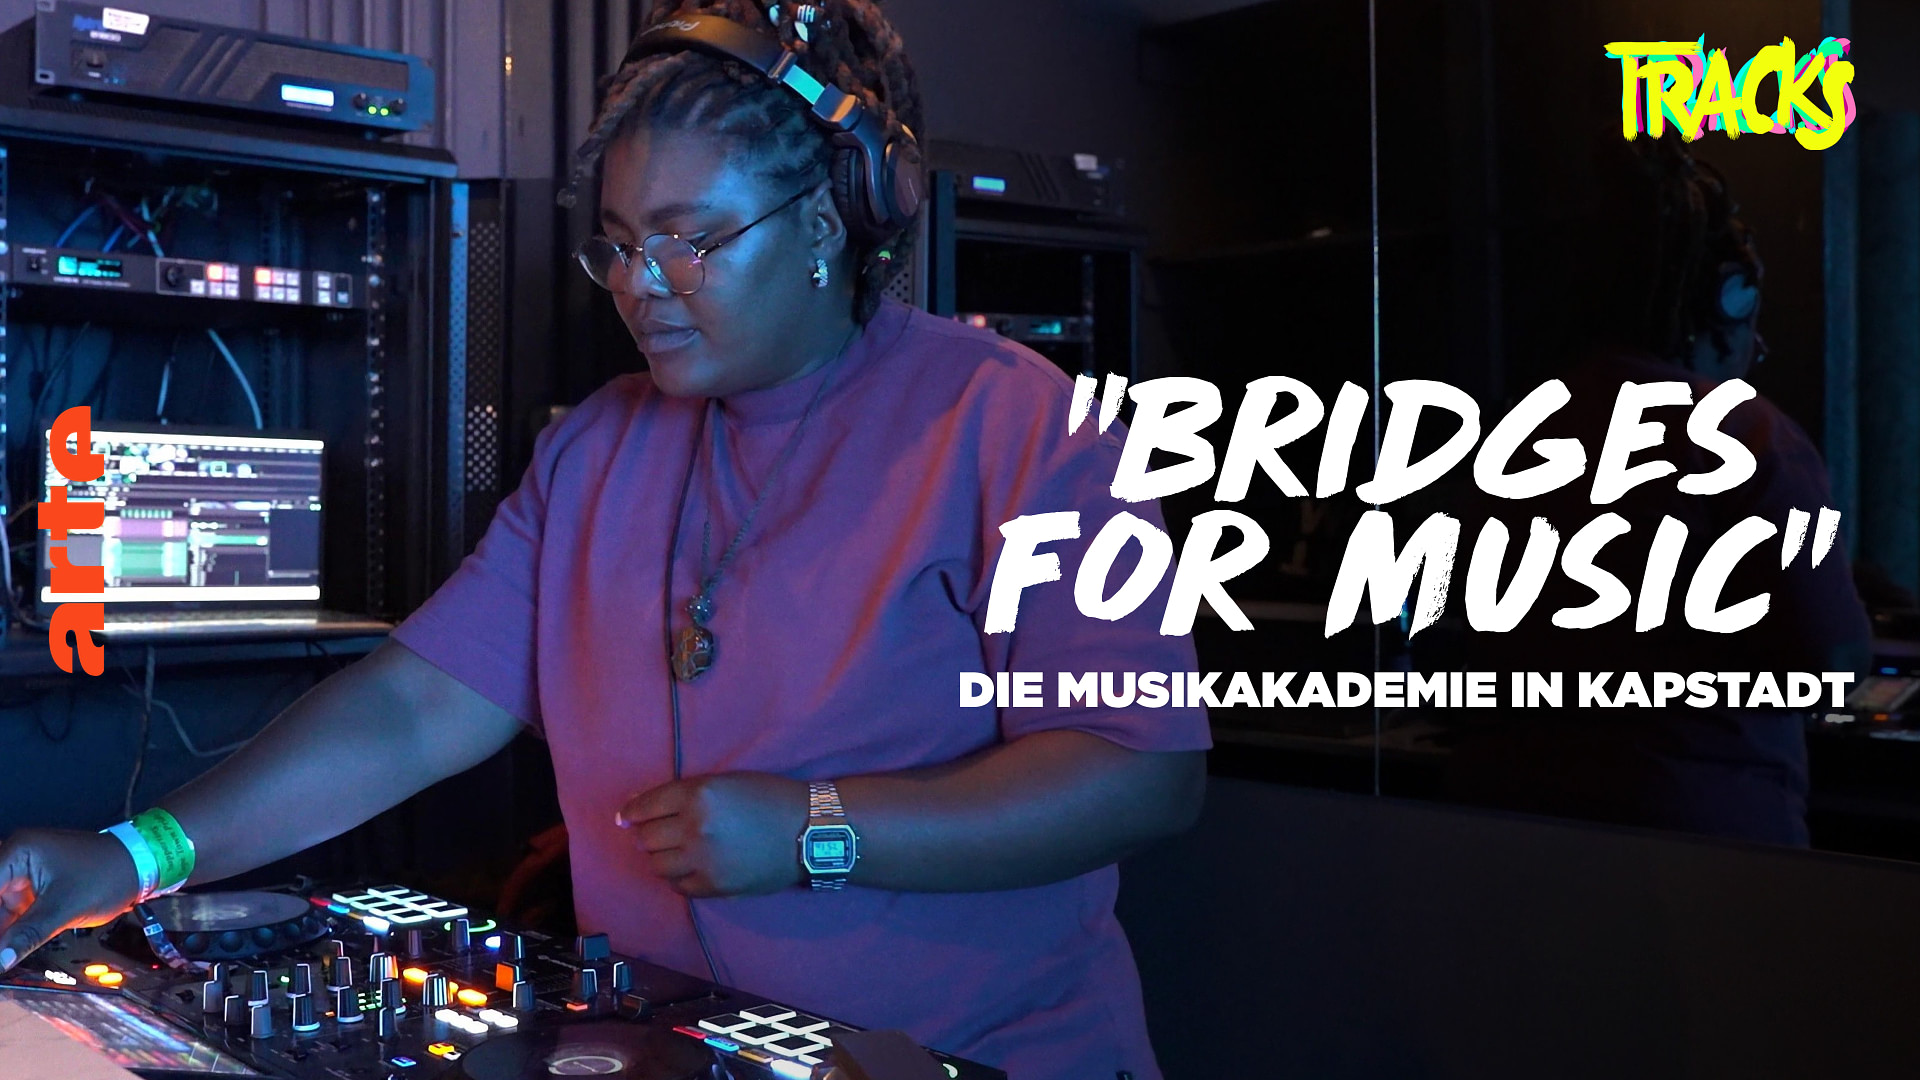 Tracks - Die Musikakademie Bridges for Music in Kapstadt